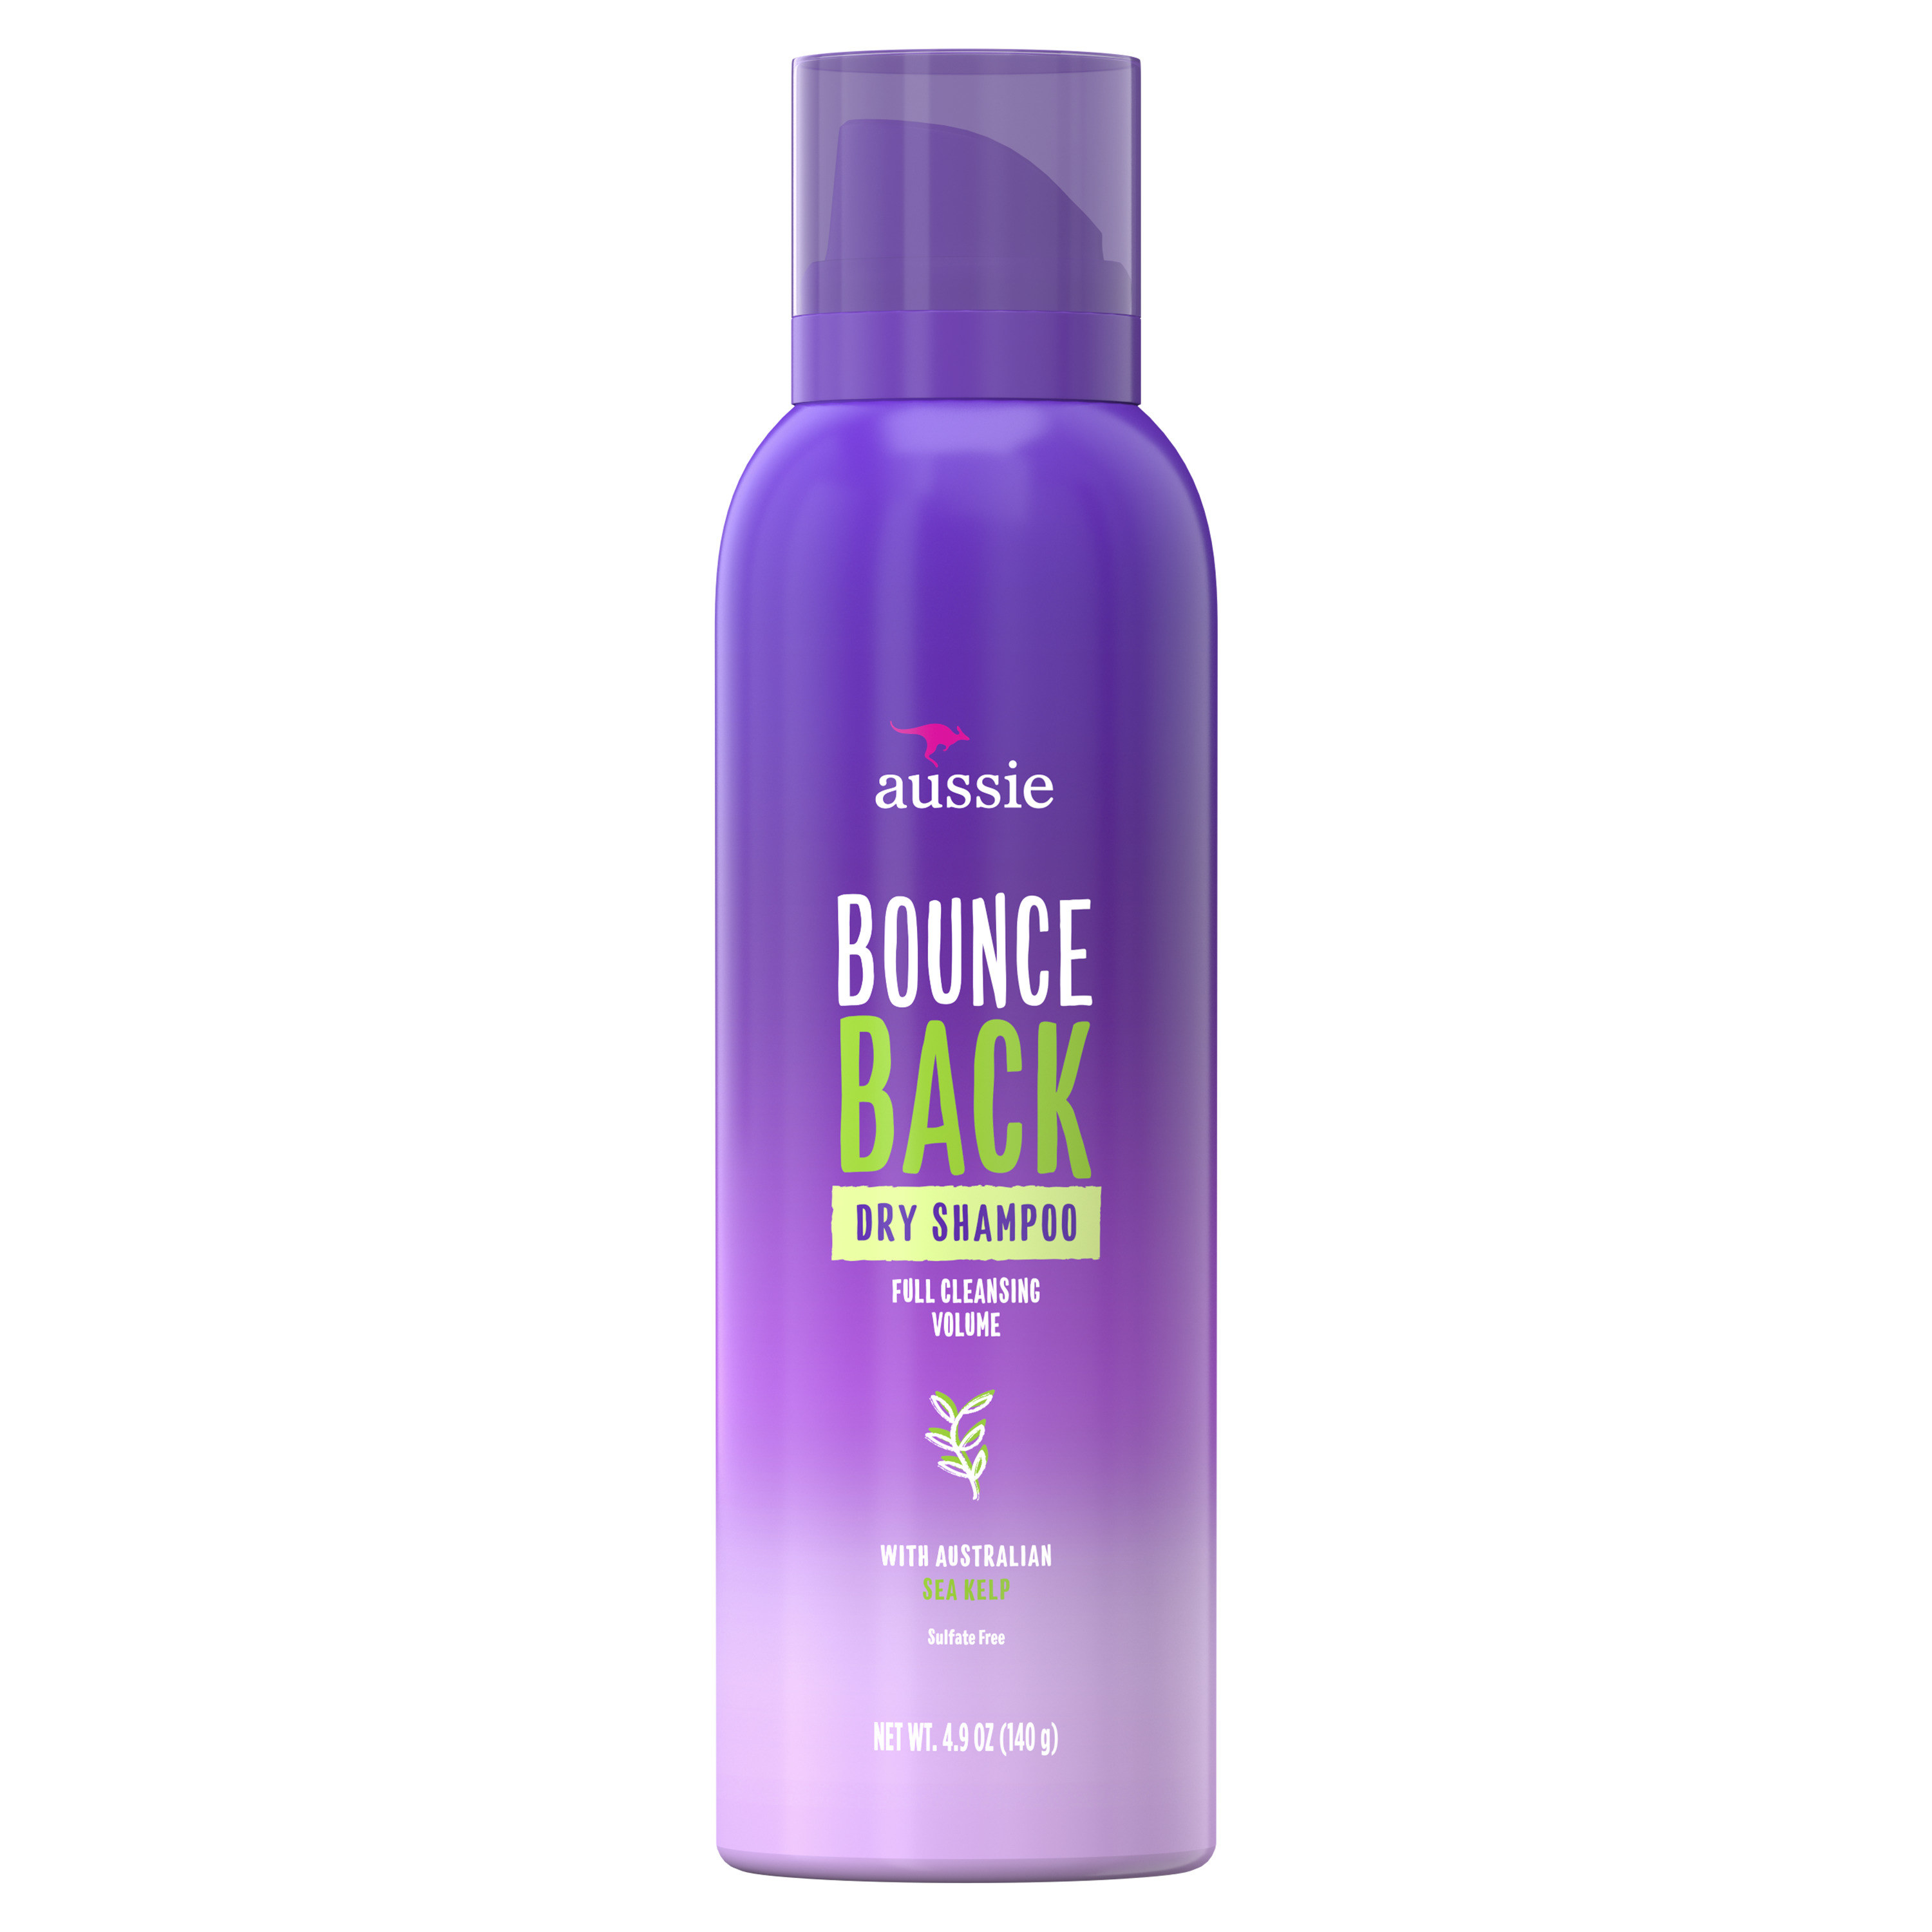 aussie bounce back dry shampoo